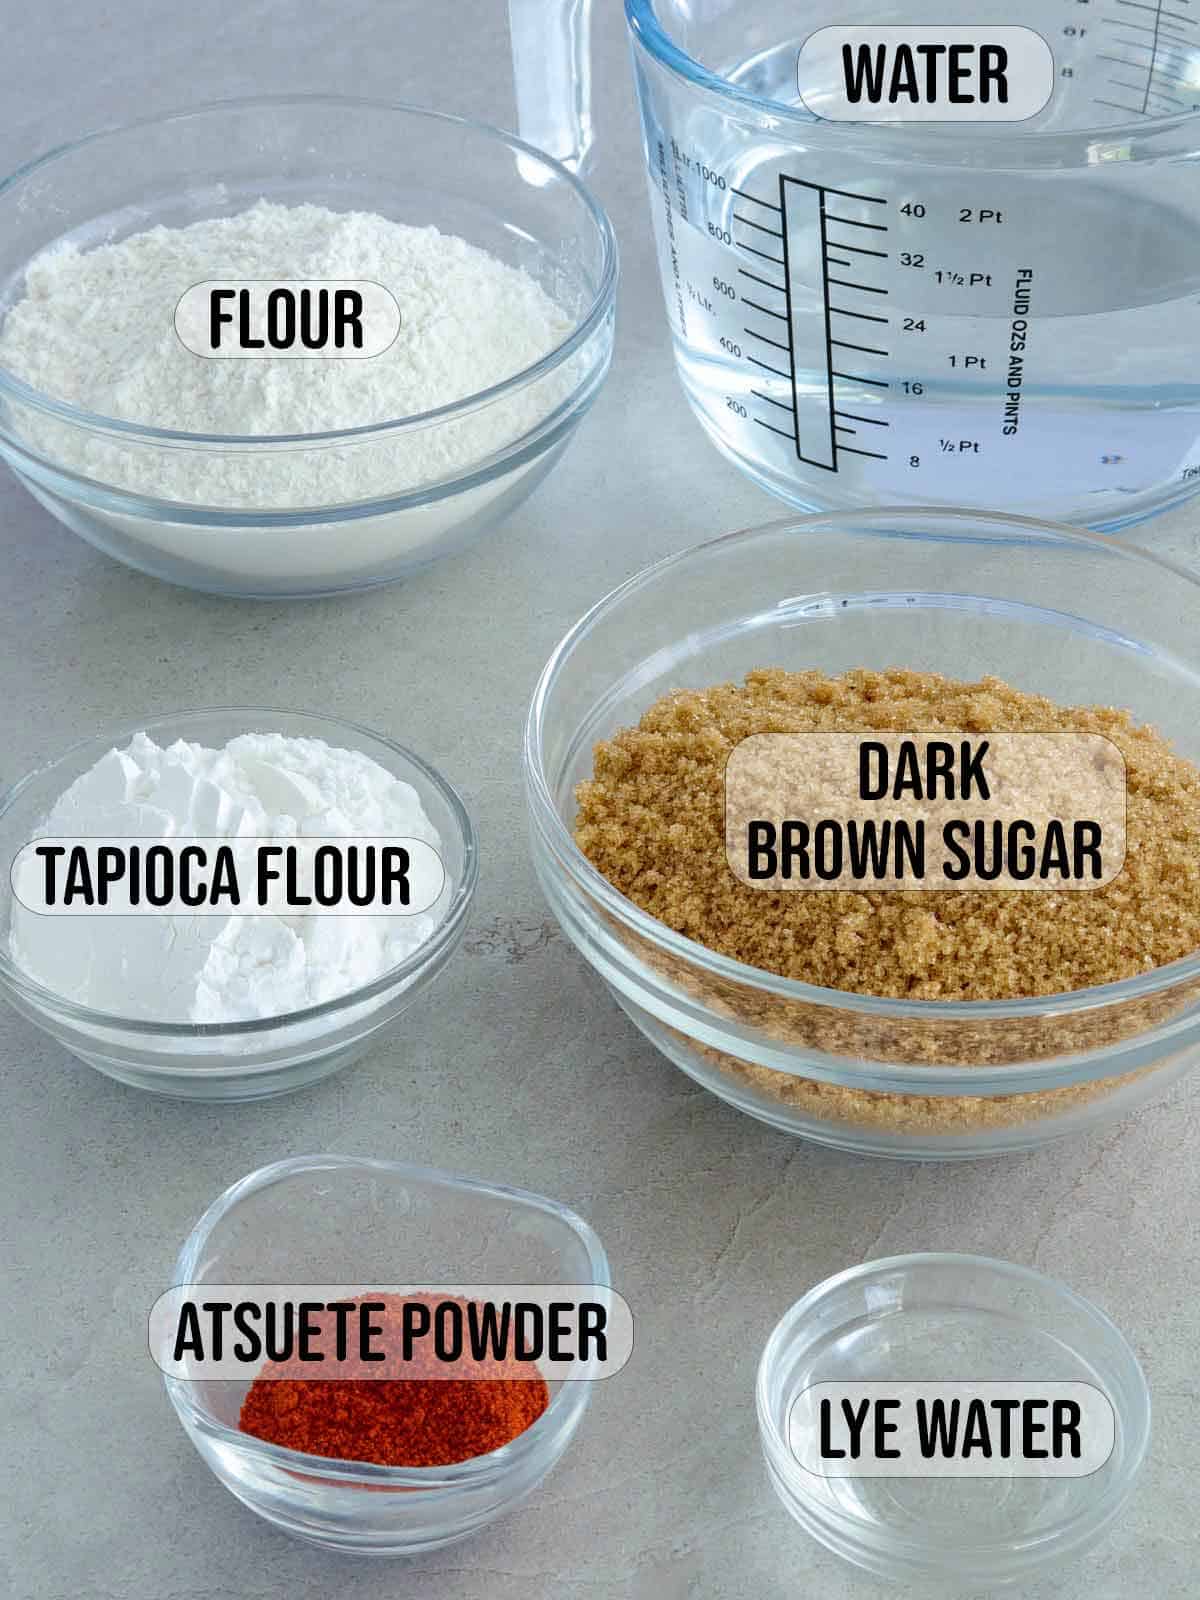 flour, tapioca flour, atsuete powder, brown sugar, lye water, water in bowls.